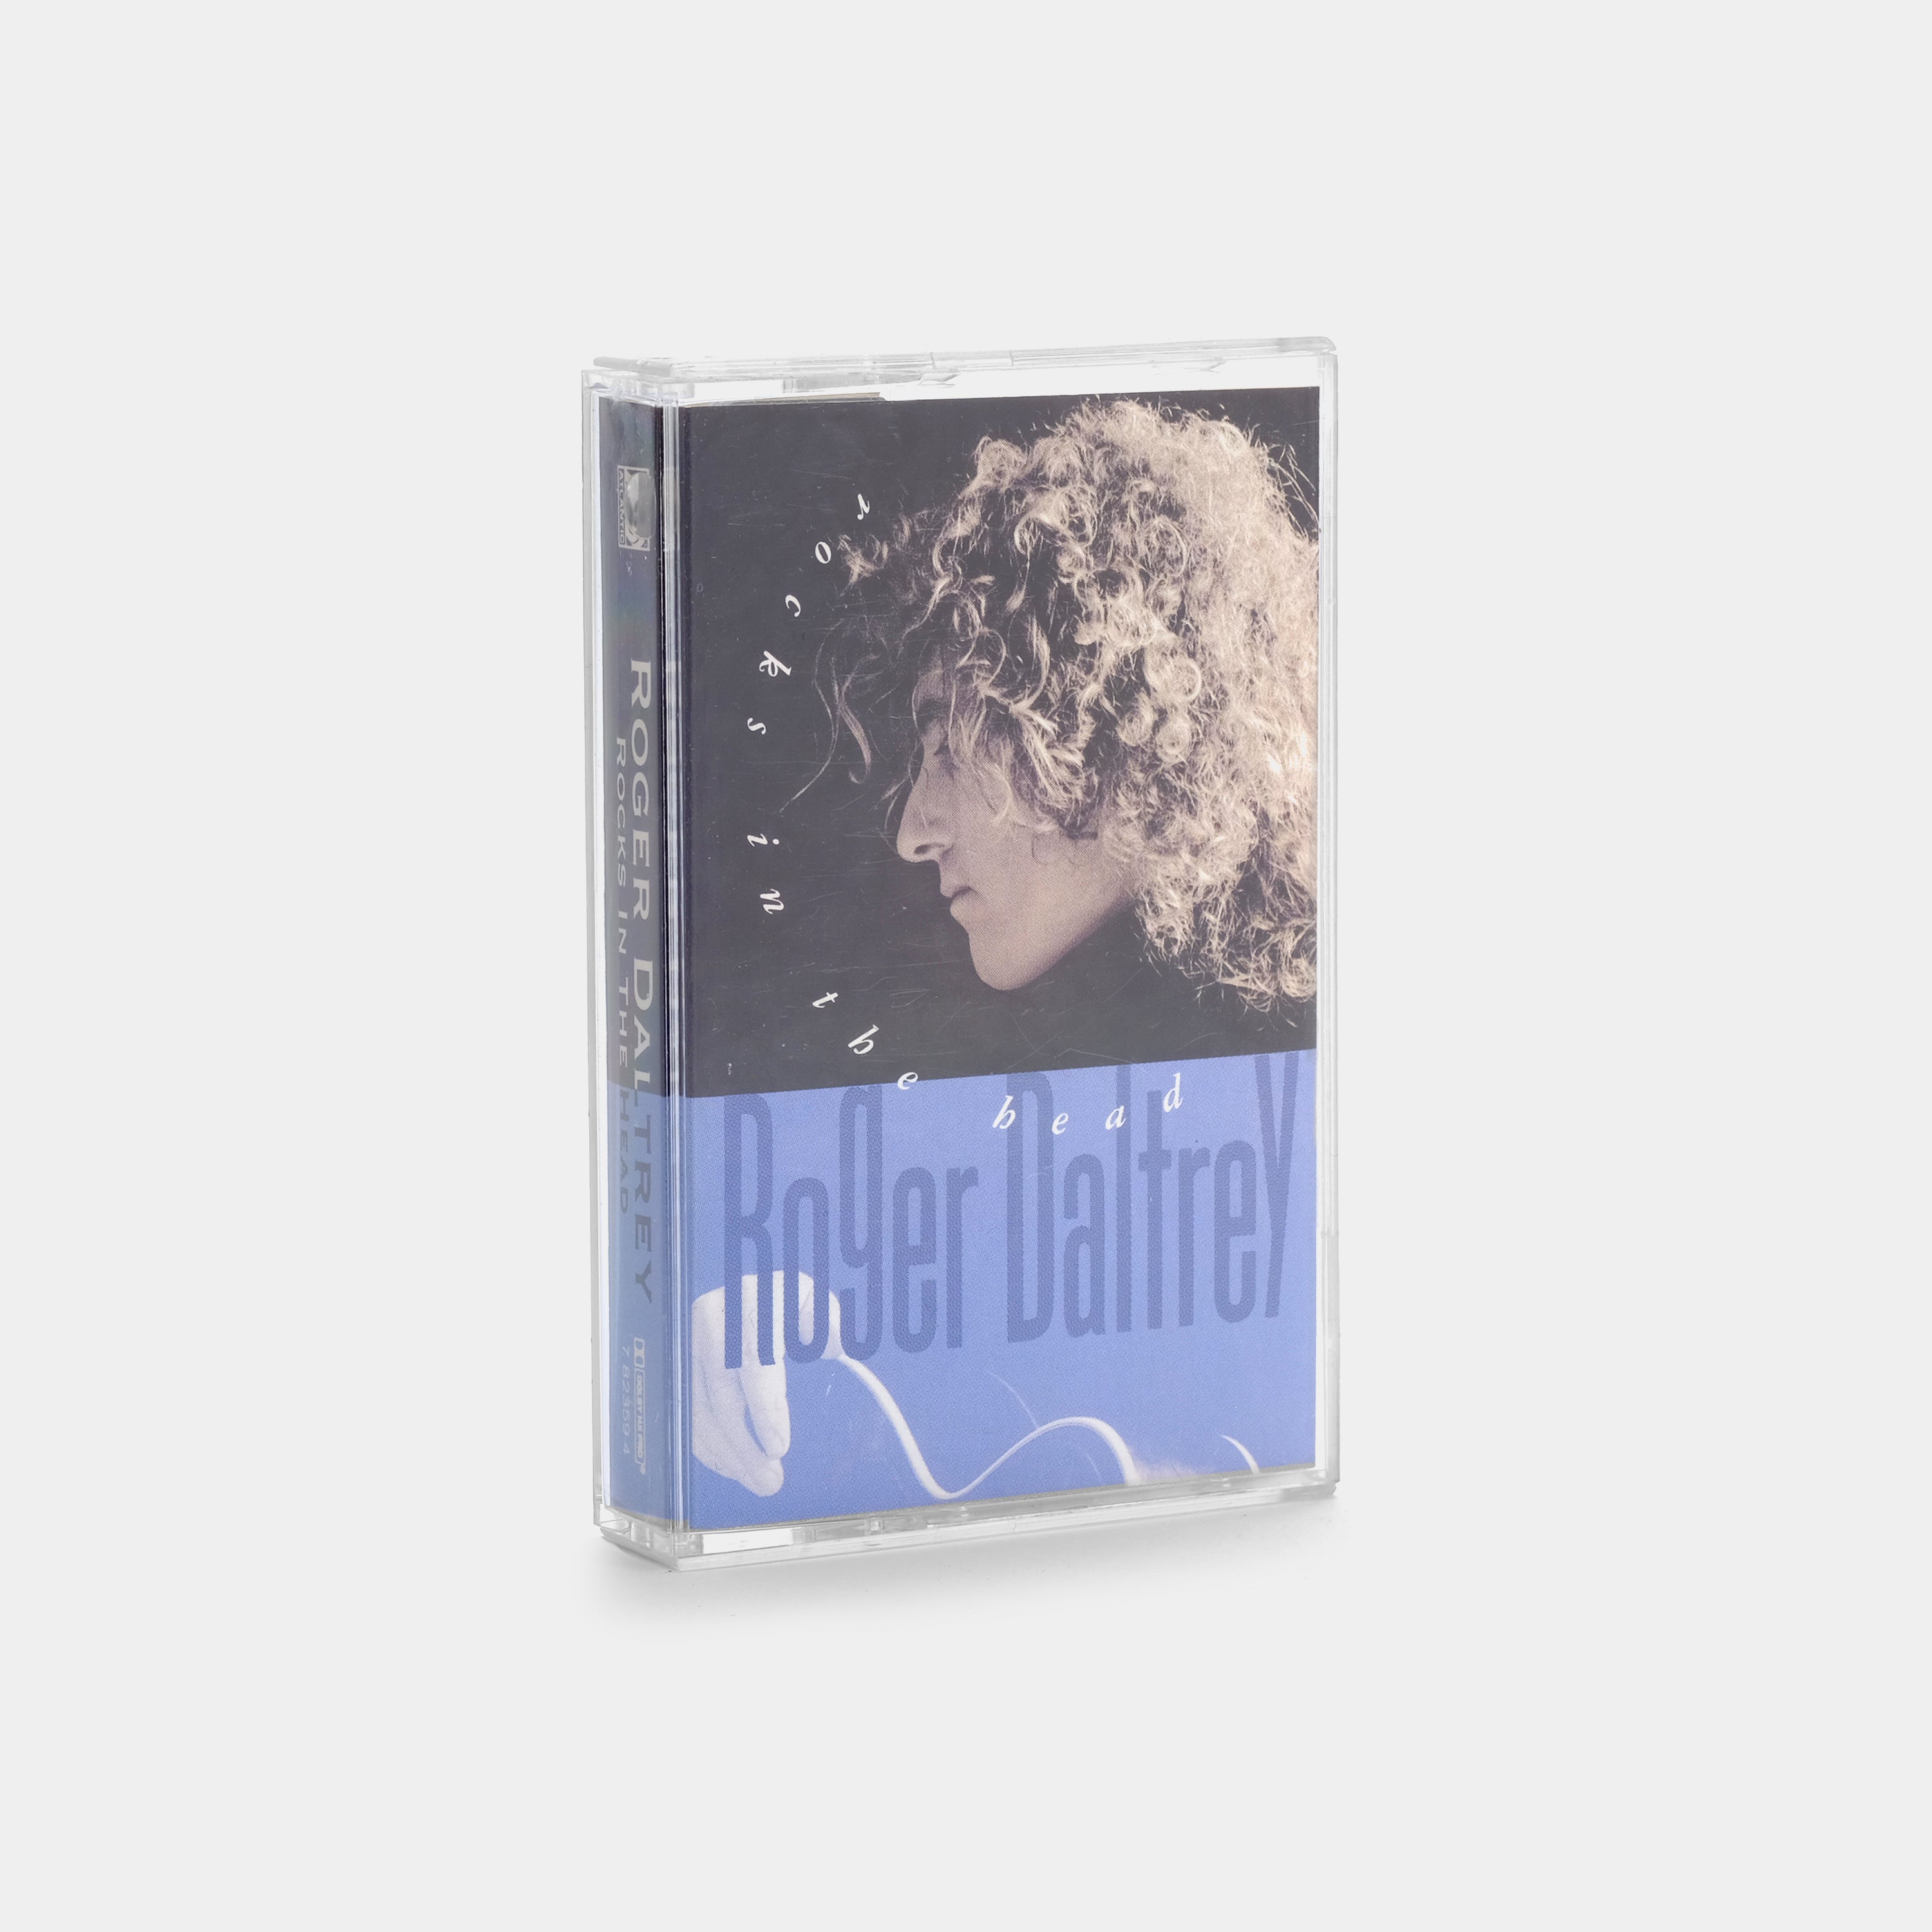 Roger Daltrey - Rocks In The Head Cassette Tape